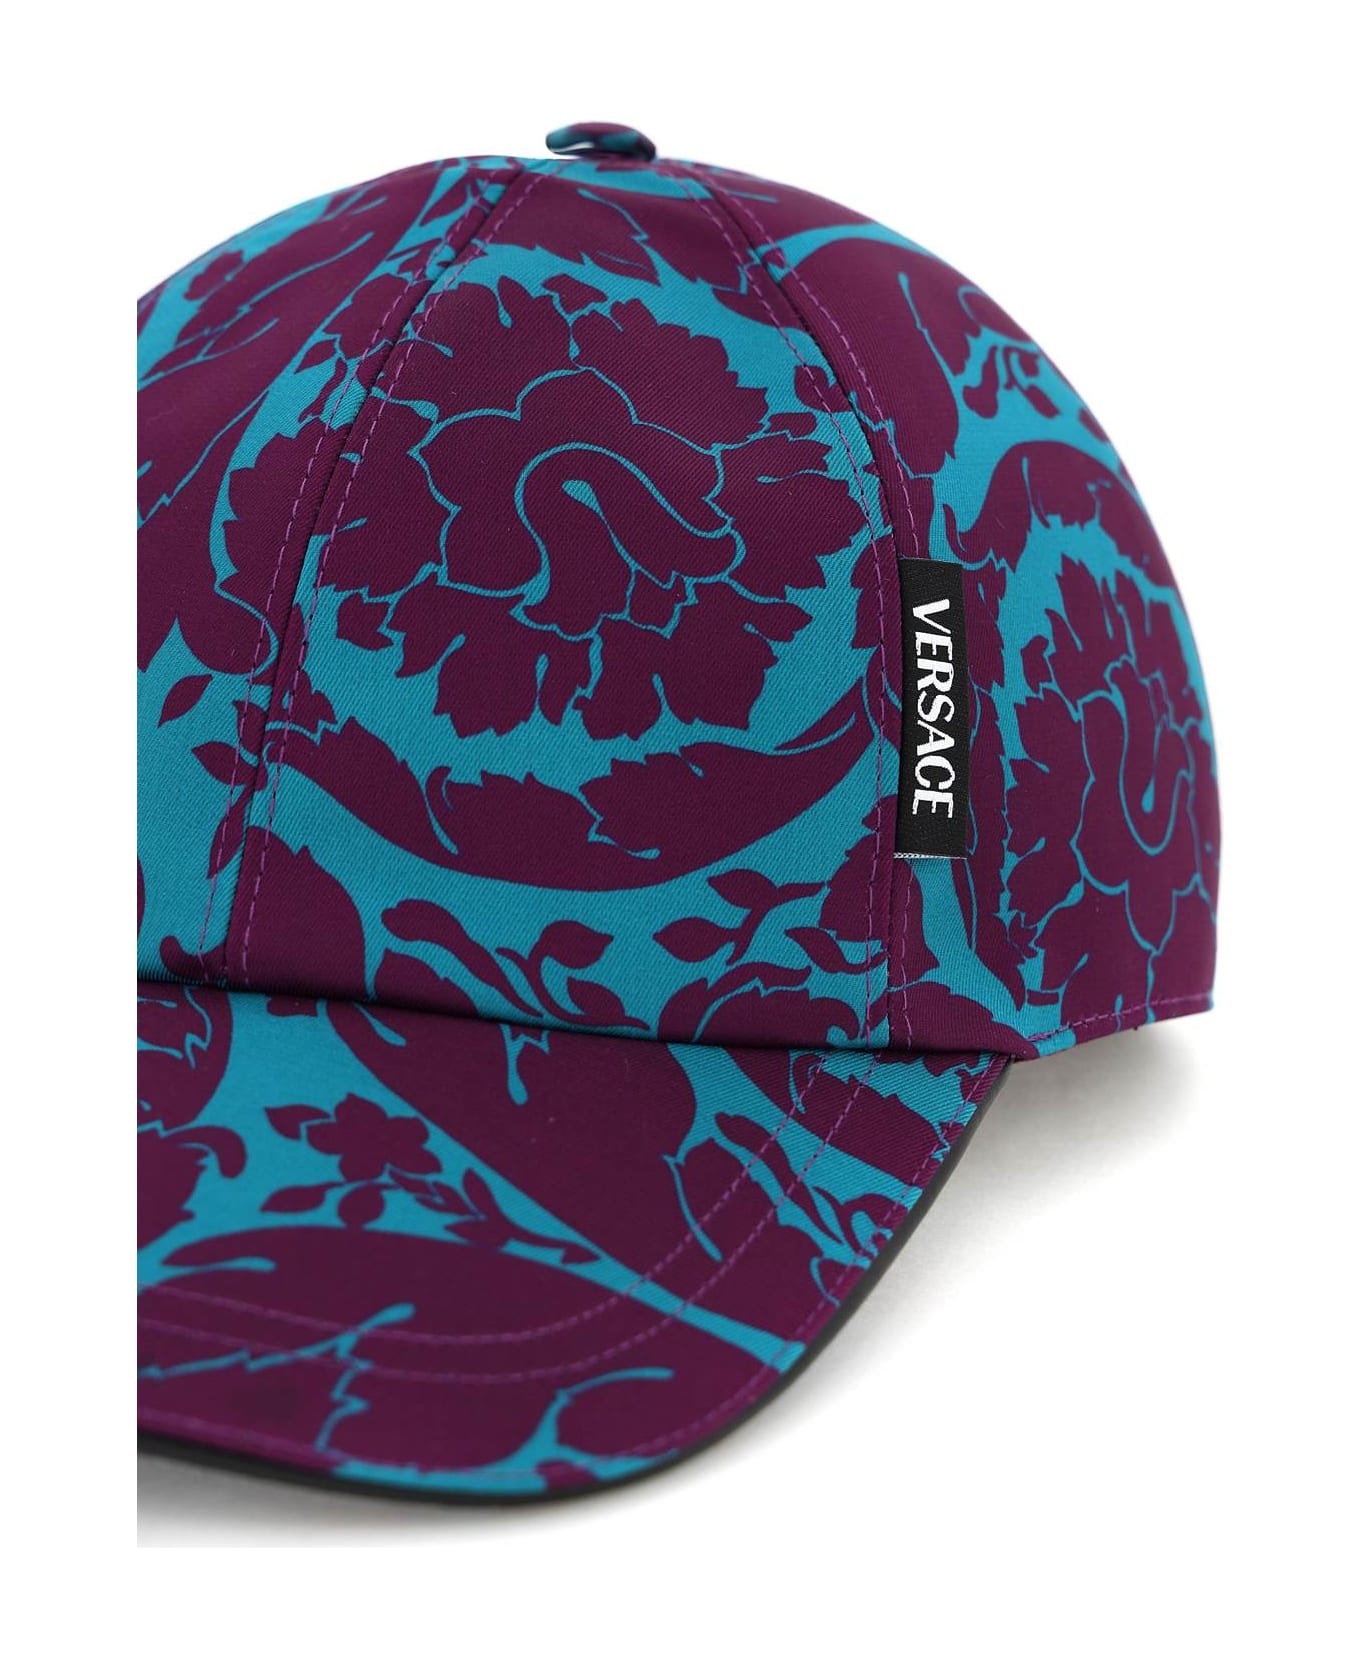 Versace 'barocco Silhoutte' Baseball Cap - TEAL PLUM (Purple)